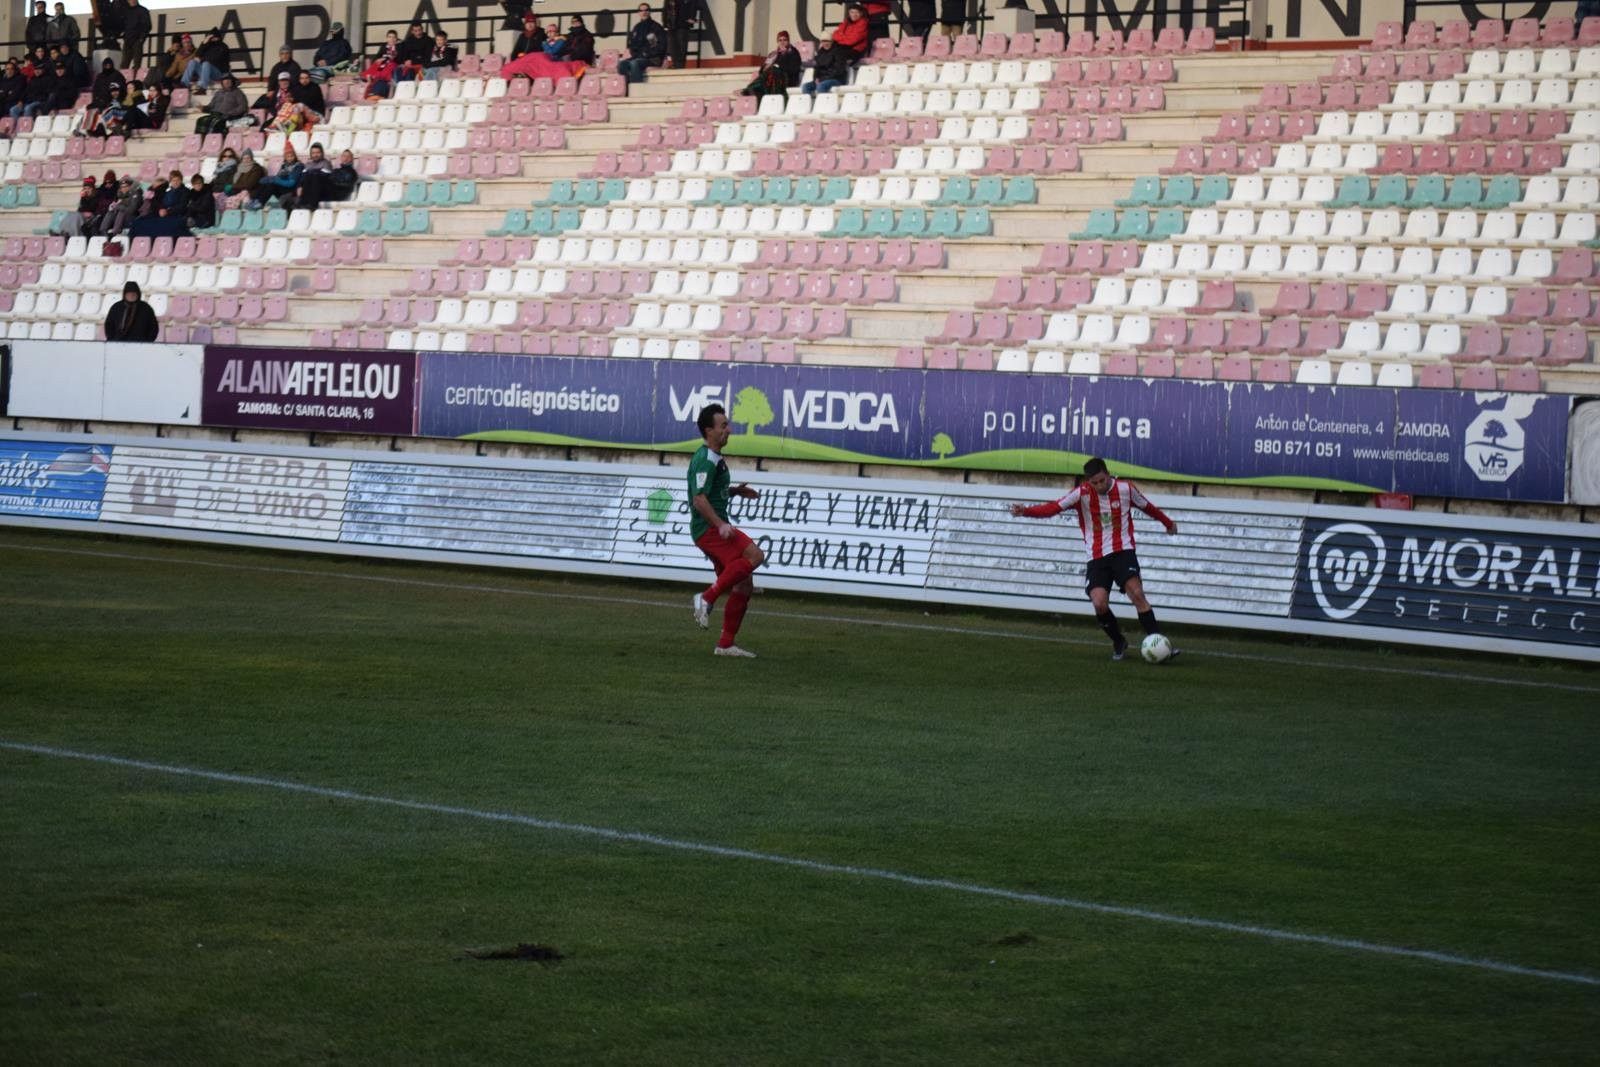  Zamora CF - Villamuriel (juego) 